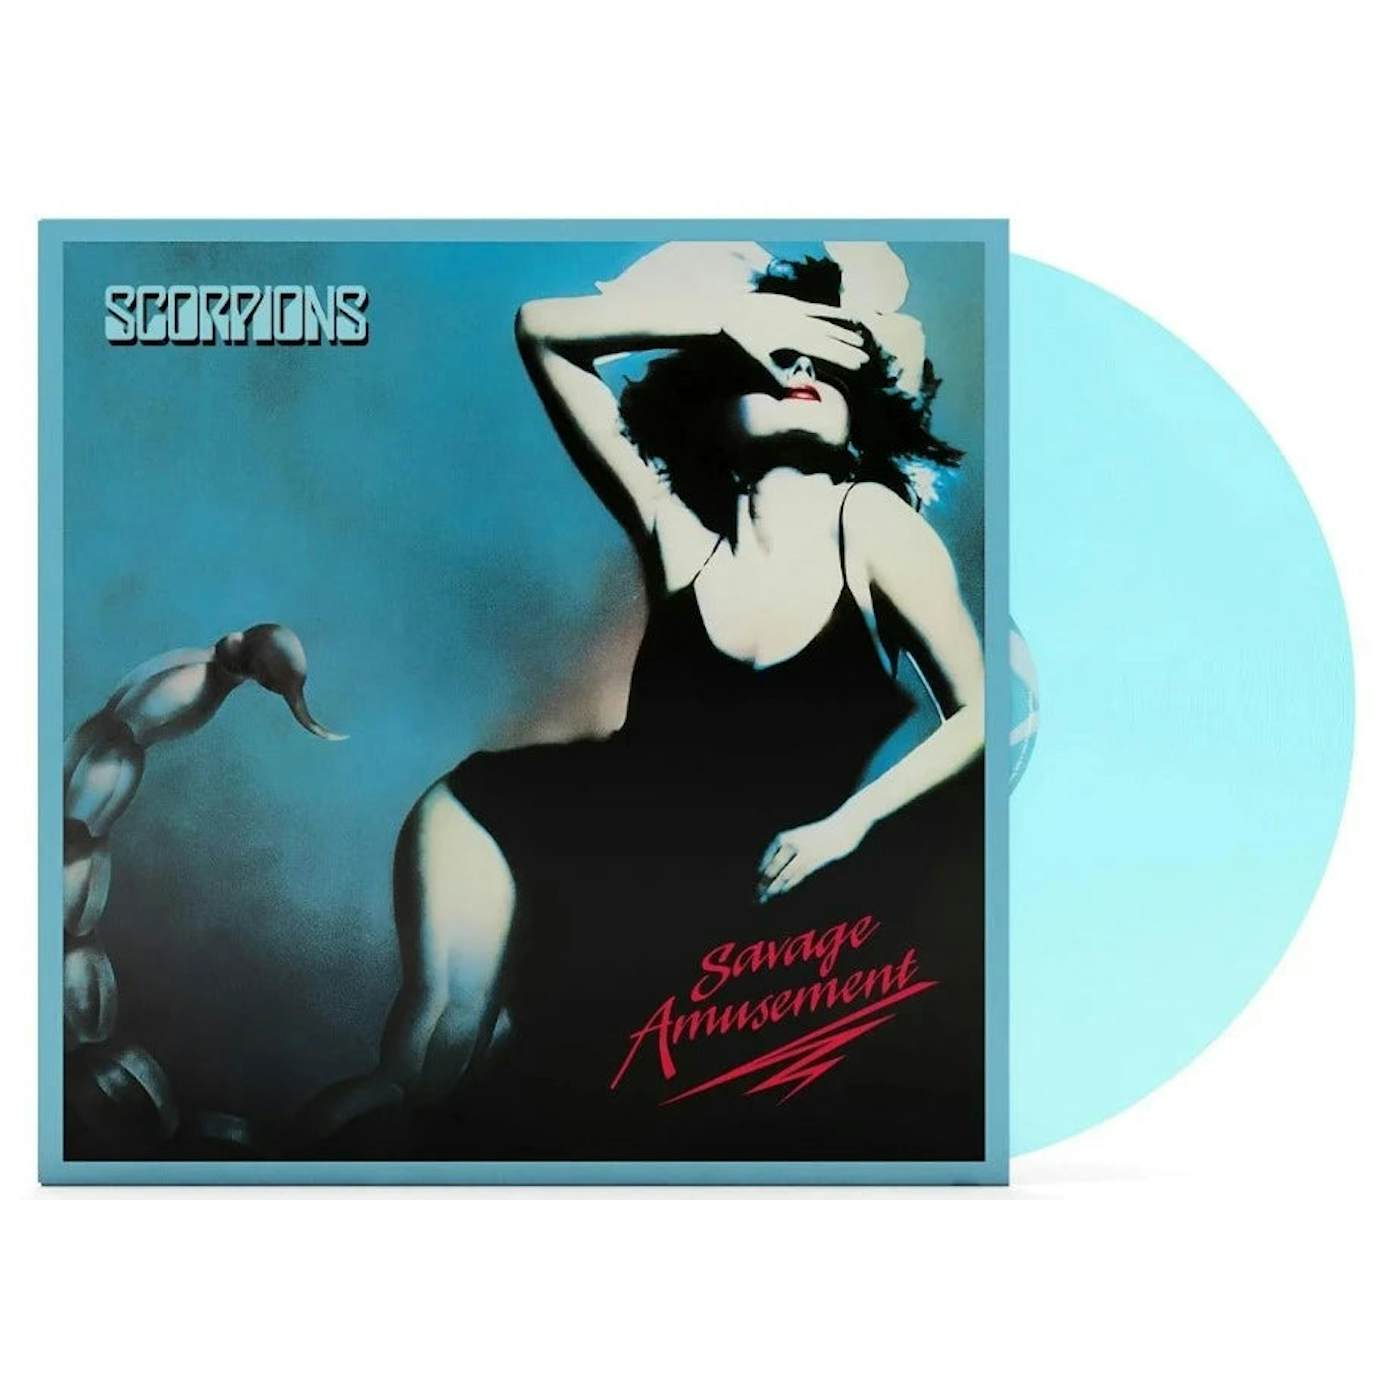 Scorpions - Savage Amusement Limited Edition